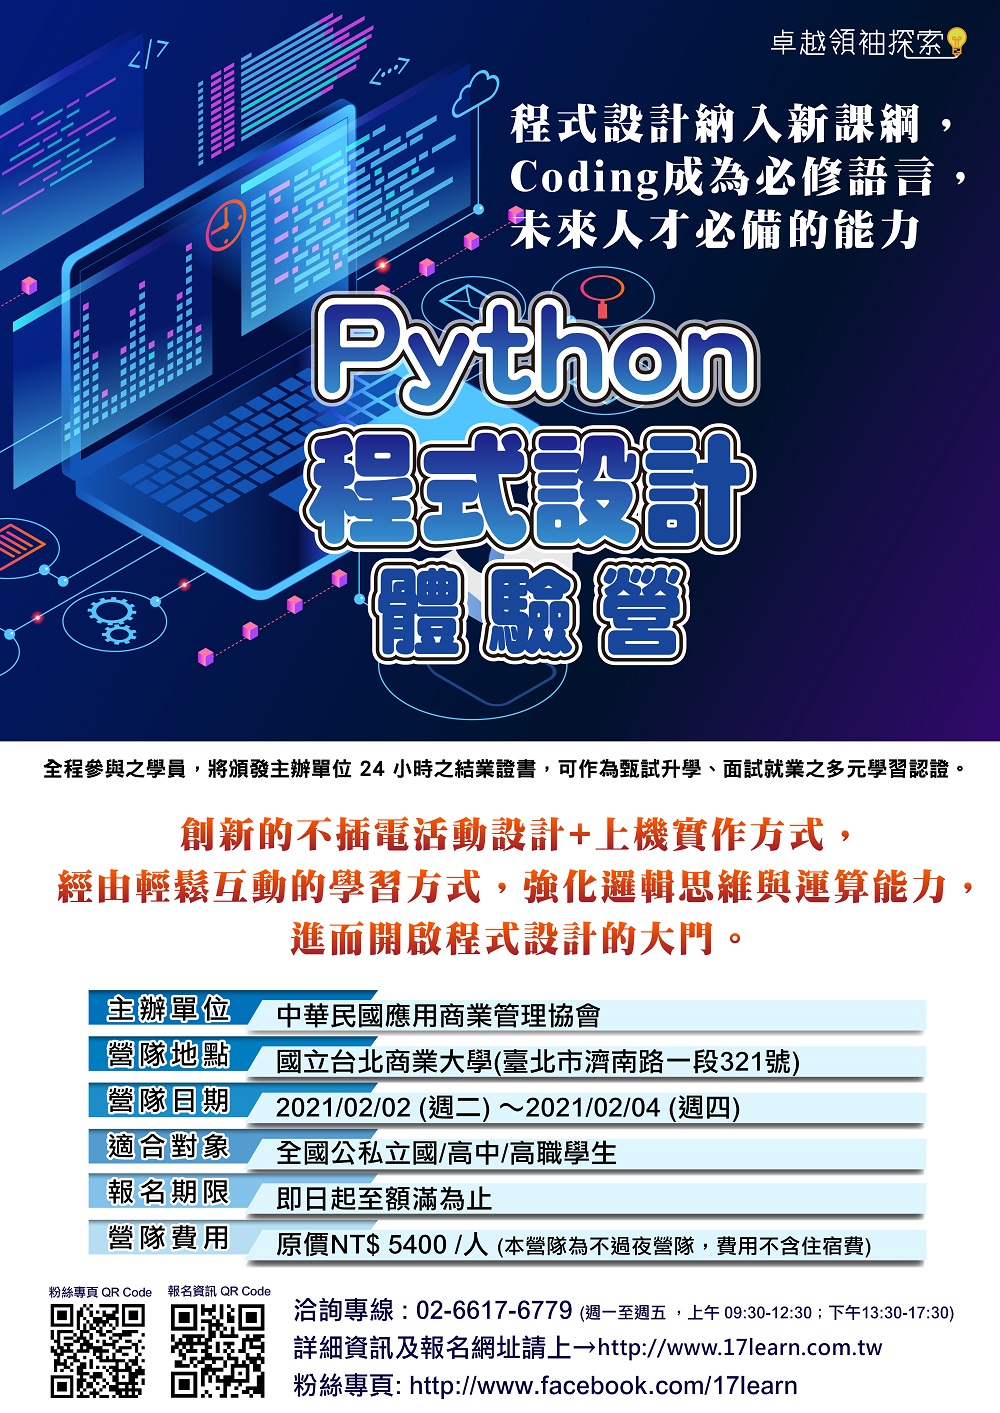 「Python 程式設計體驗營」_ATT1.jpg (561 KB)